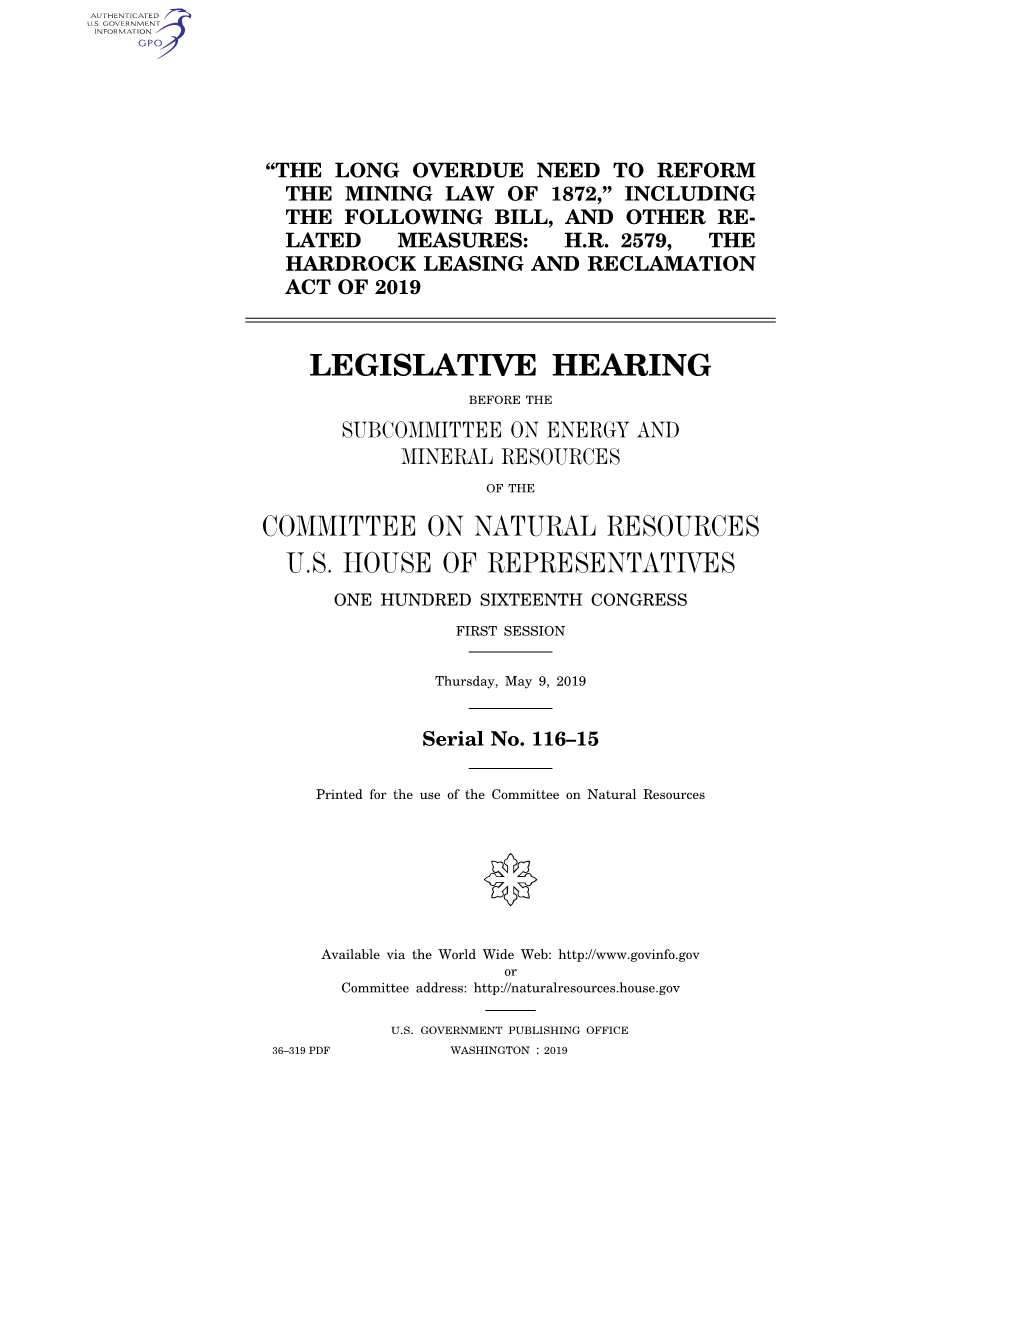 Legislative Hearing Committee on Natural Resources U.S. House of Representatives